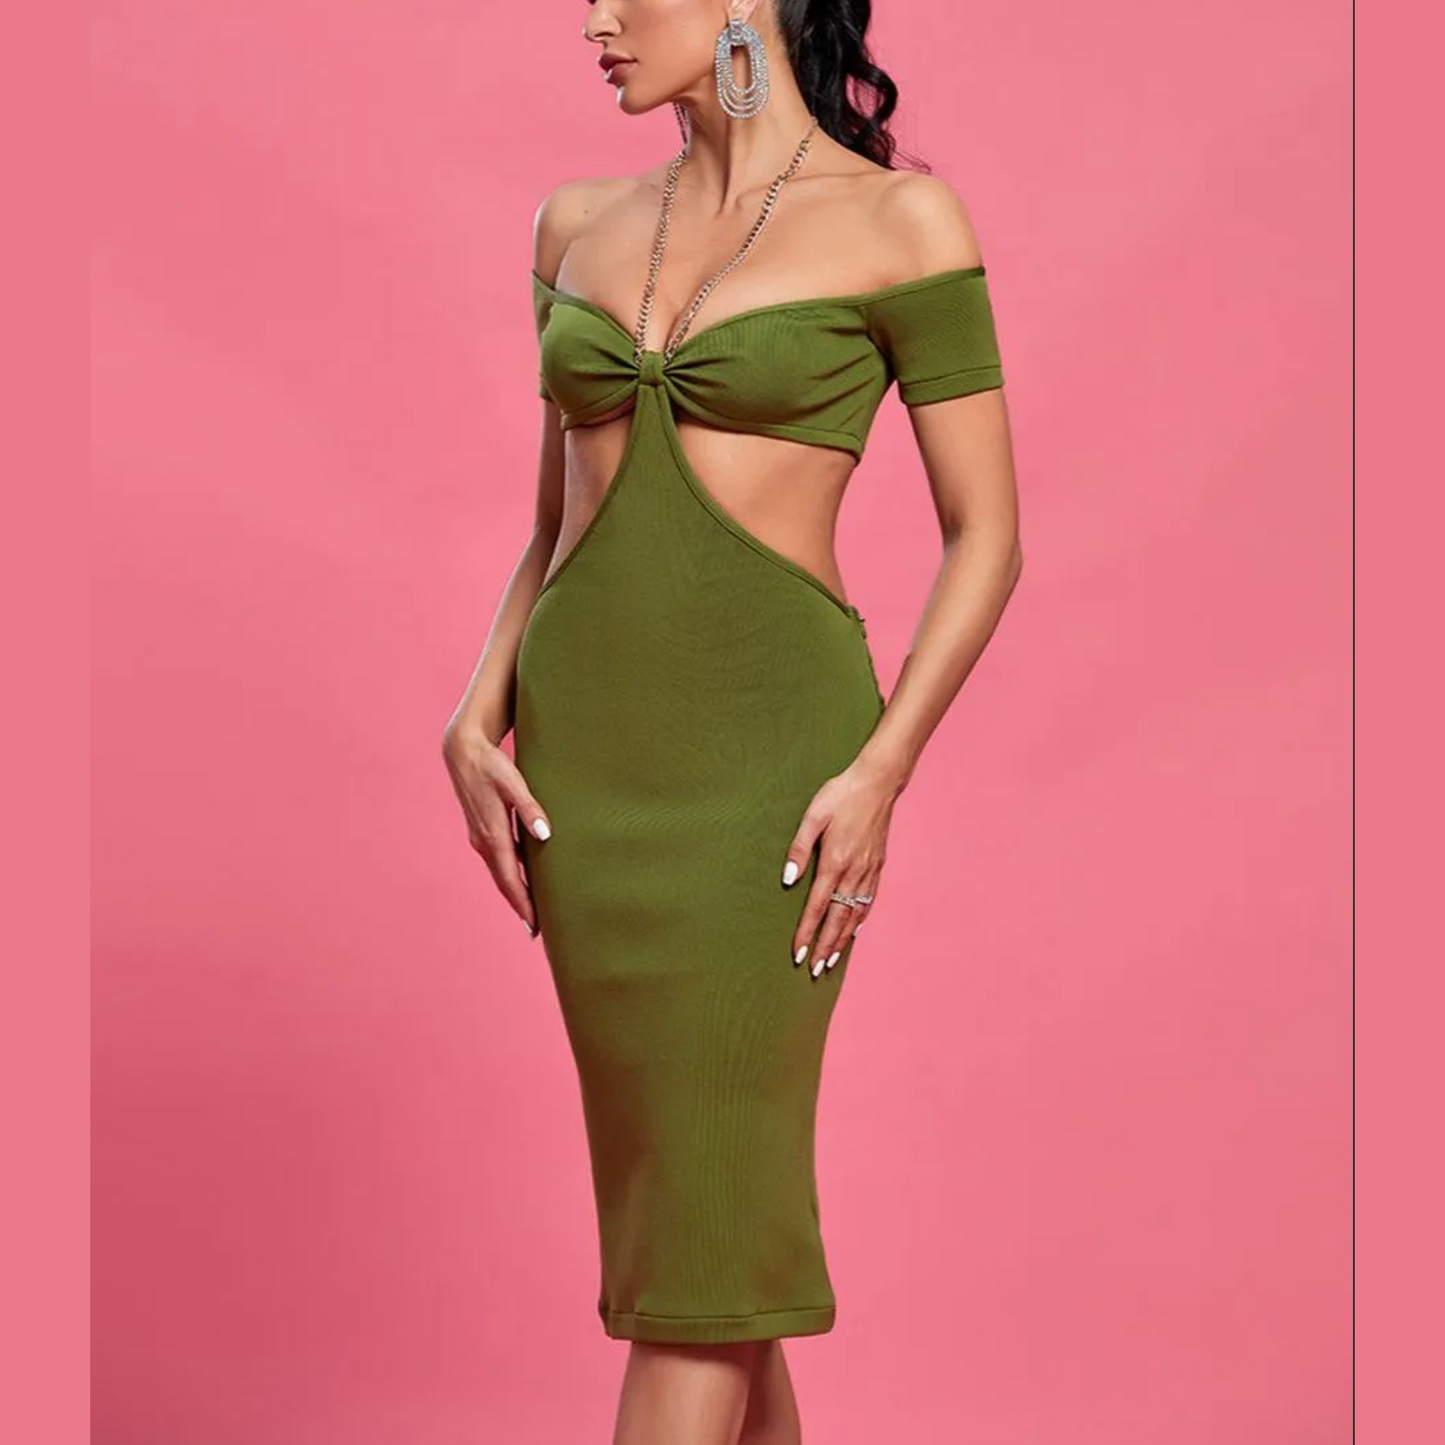 Della - Green Cutout Chain Embellished Bandage Dress